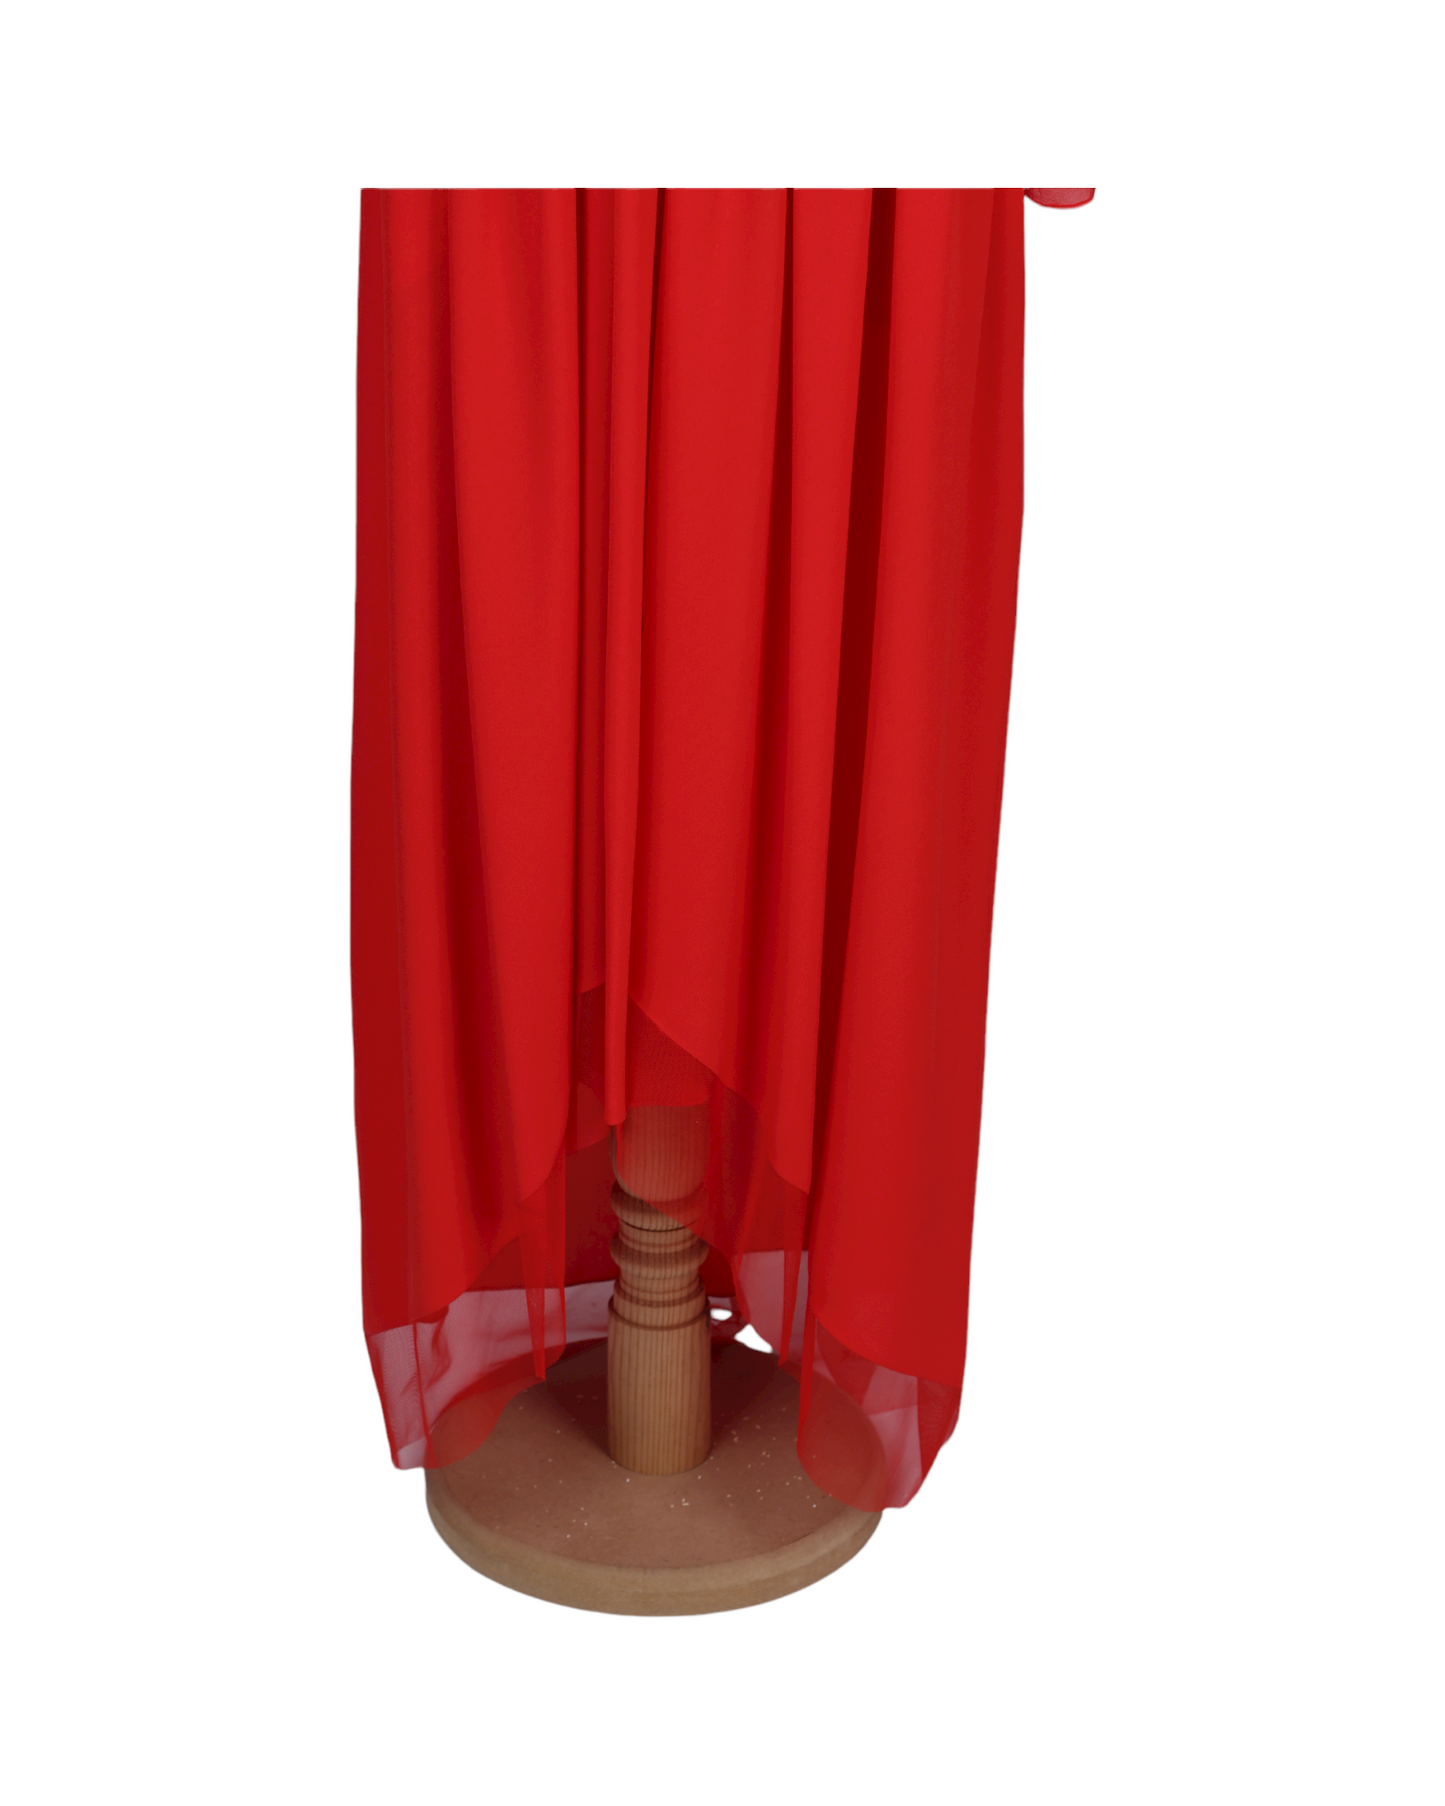 BCBG Maxazria Red Dress